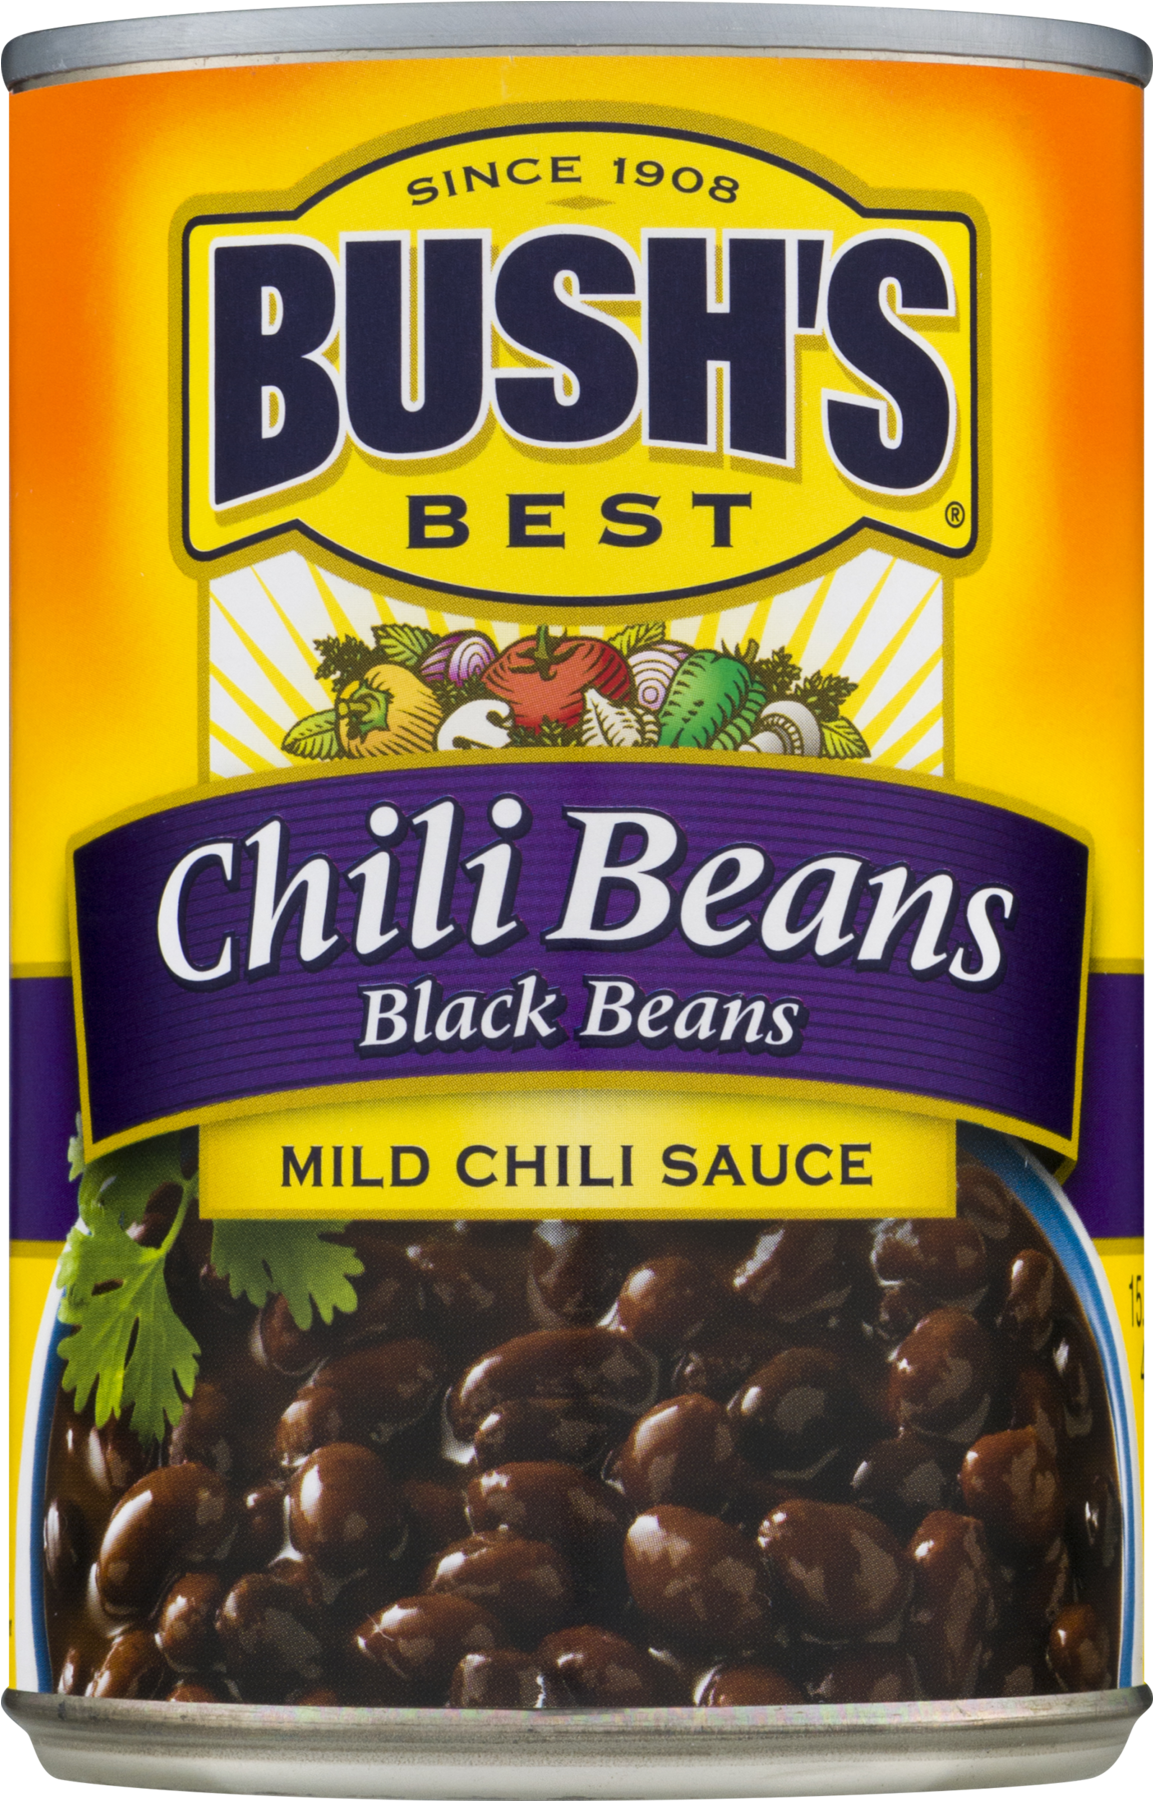 Bushs Best Chili Beans Black Beans Mild Chili Sauce